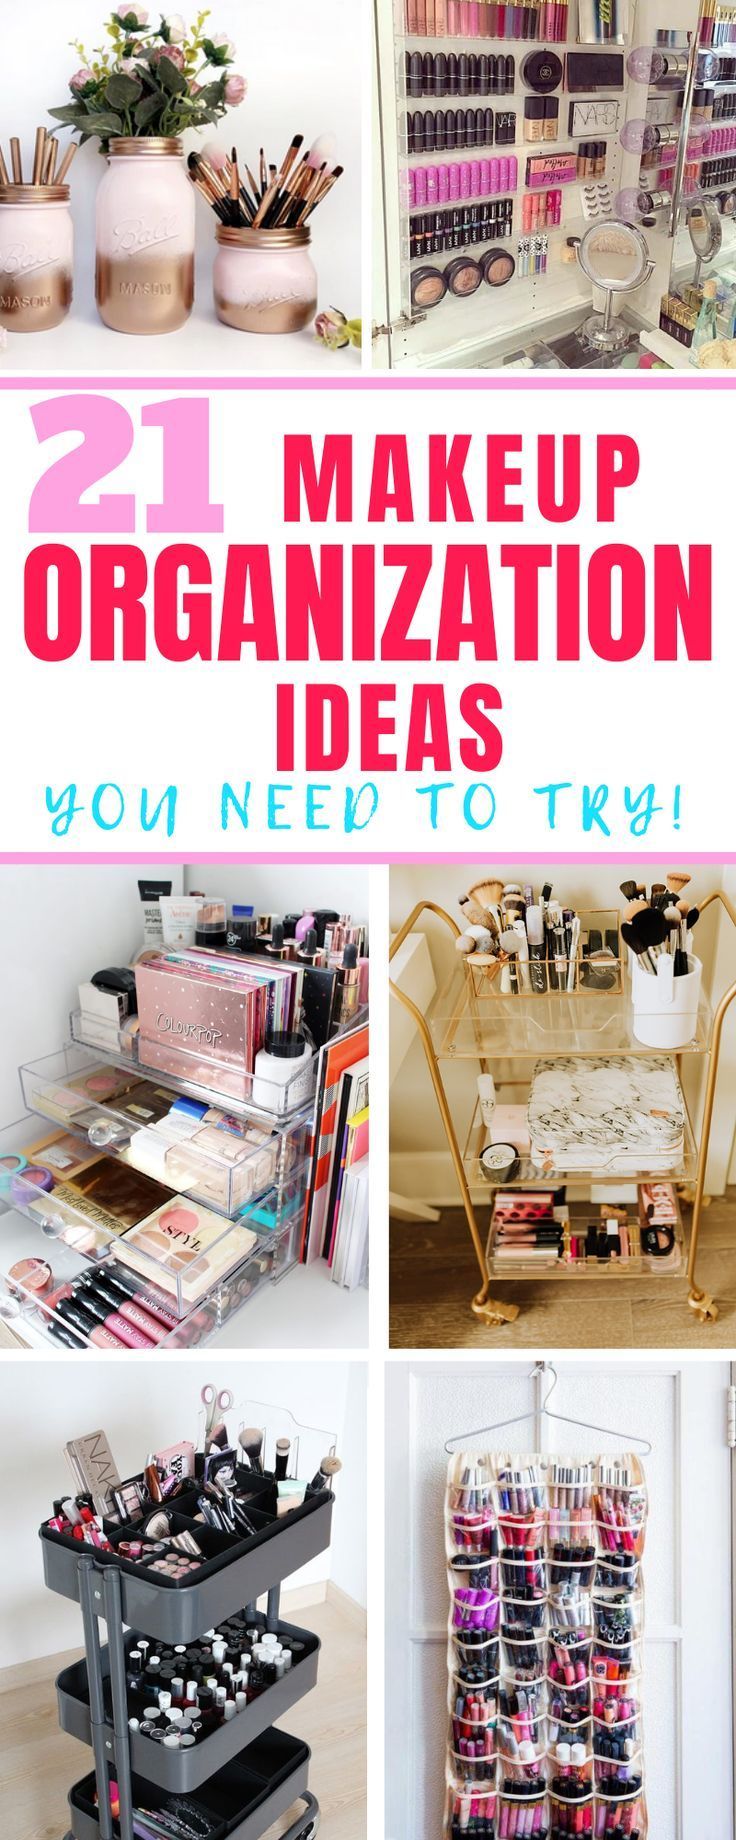 21 Creative Makeup Organization Ideas to Declutter Your Space - 21 Creative Makeup Organization Ideas to Declutter Your Space -   18 diy Organization vanity ideas